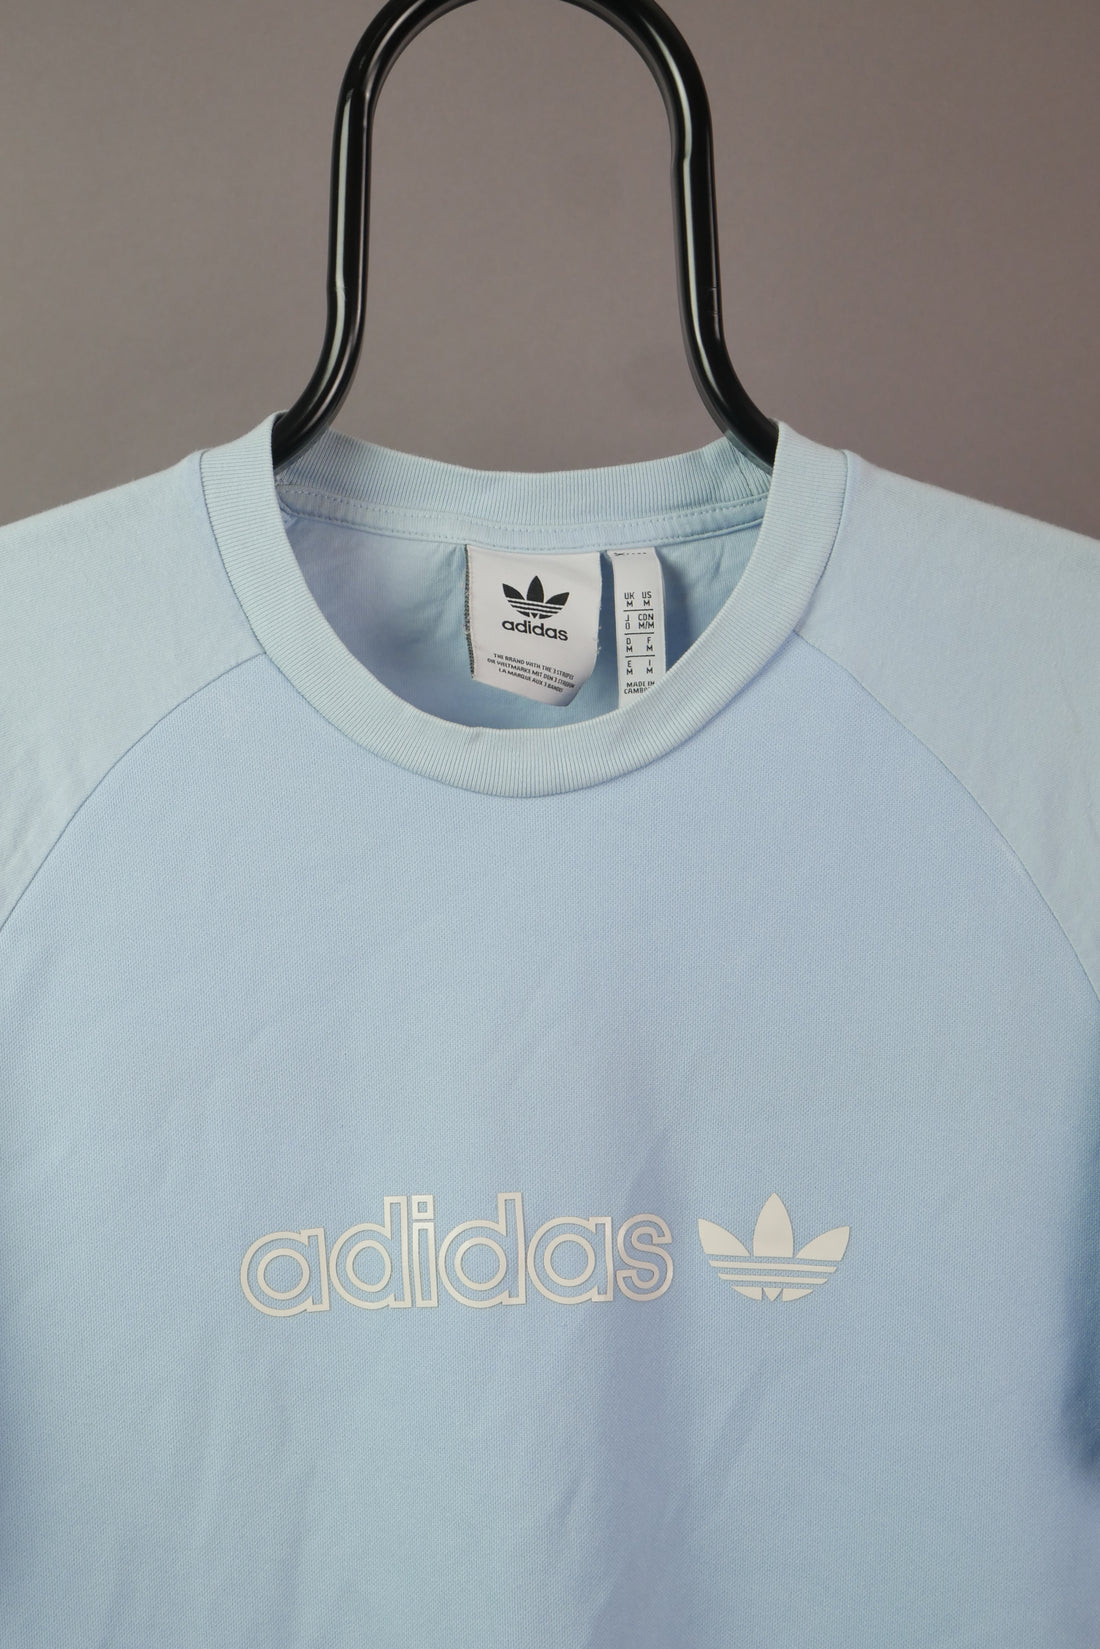 The Adidas Graphic Logo T-Shirt (M)